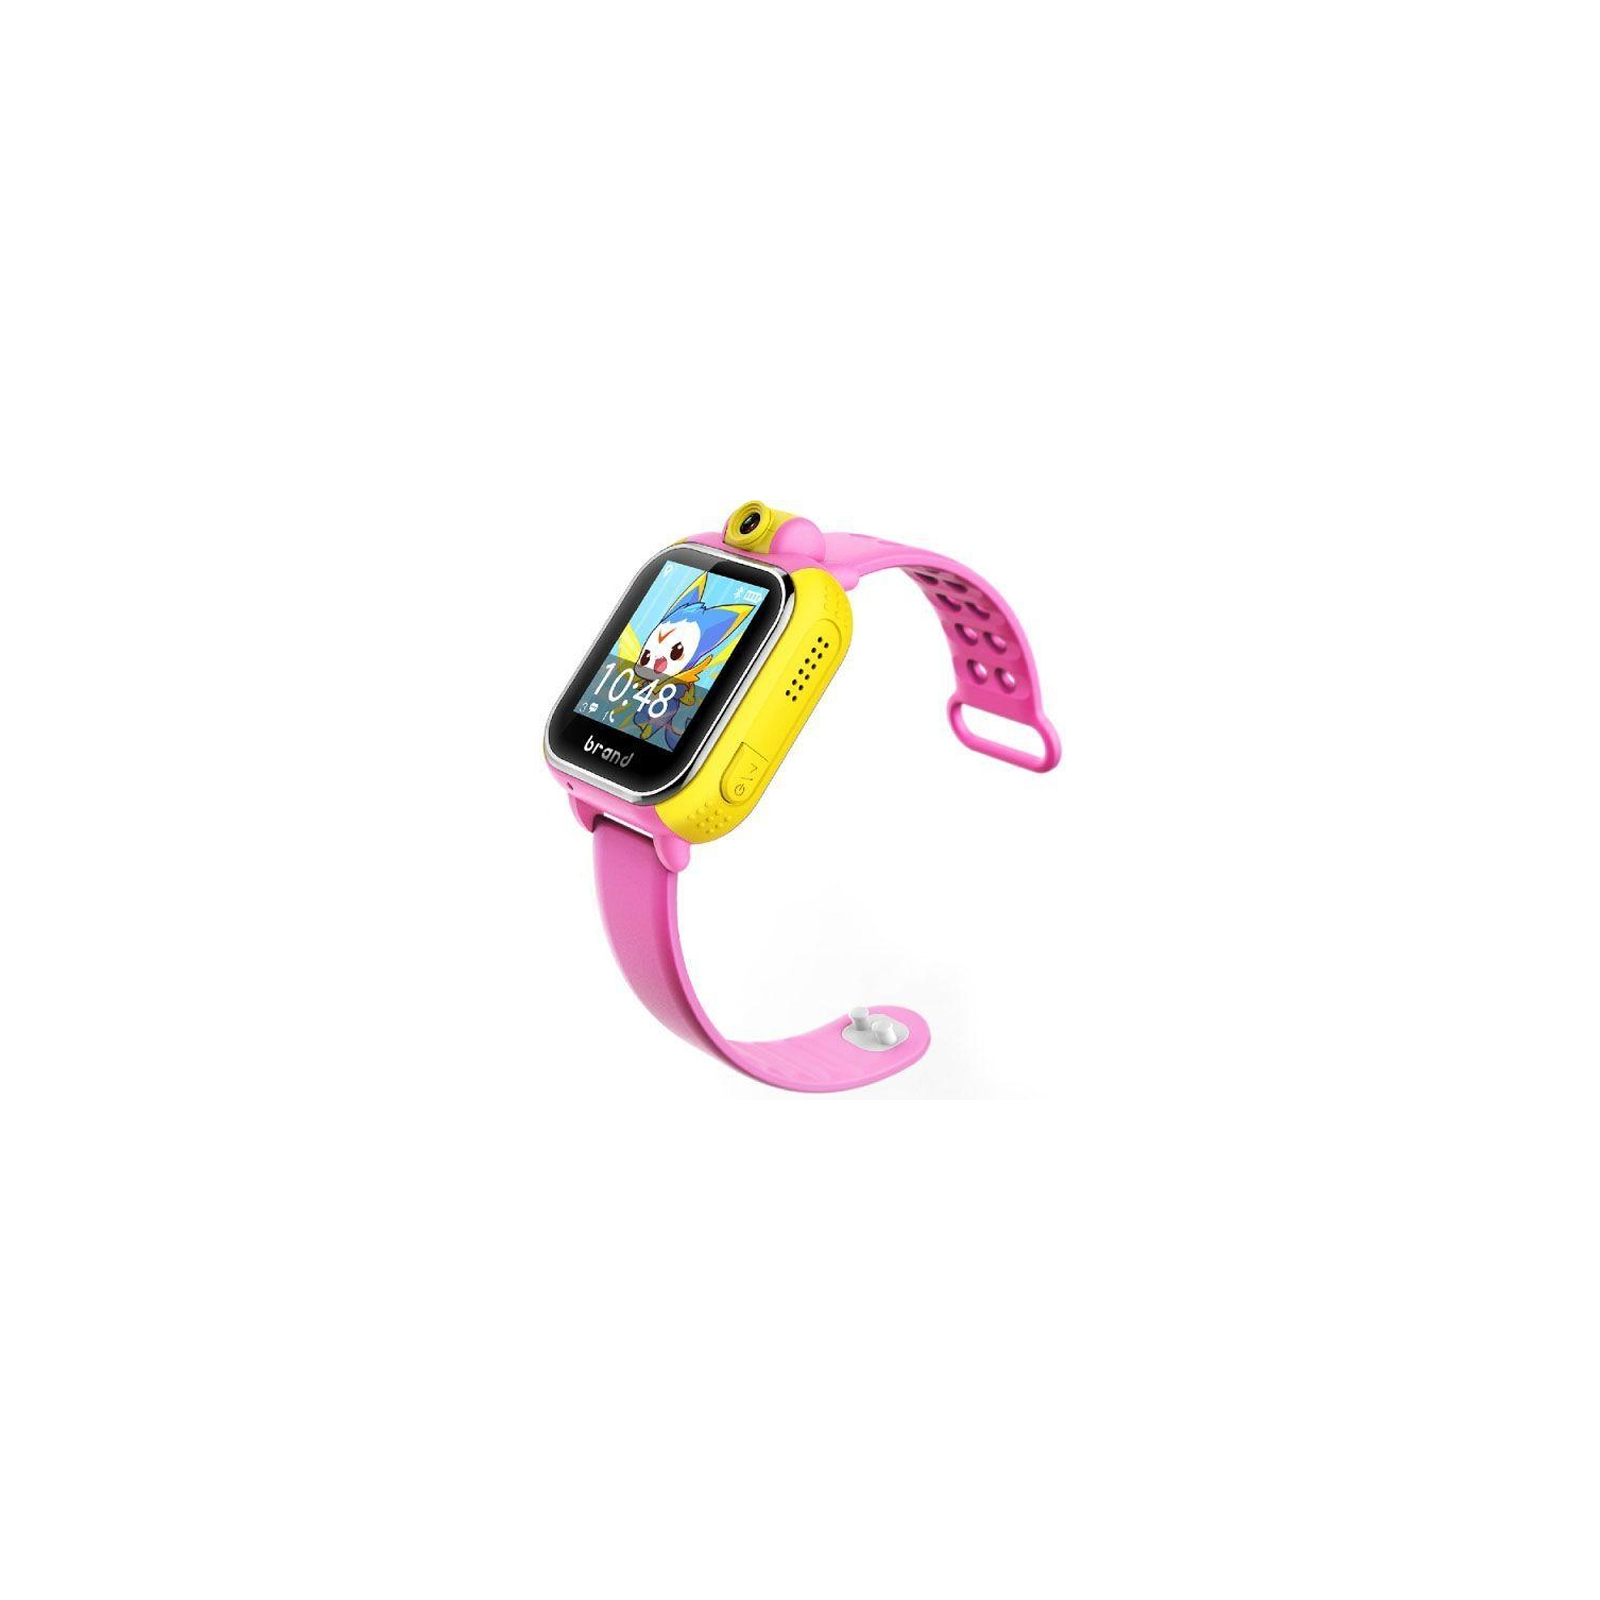 Смарт-годинник UWatch Q200 Kid smart watch Black (F_50526) зображення 2